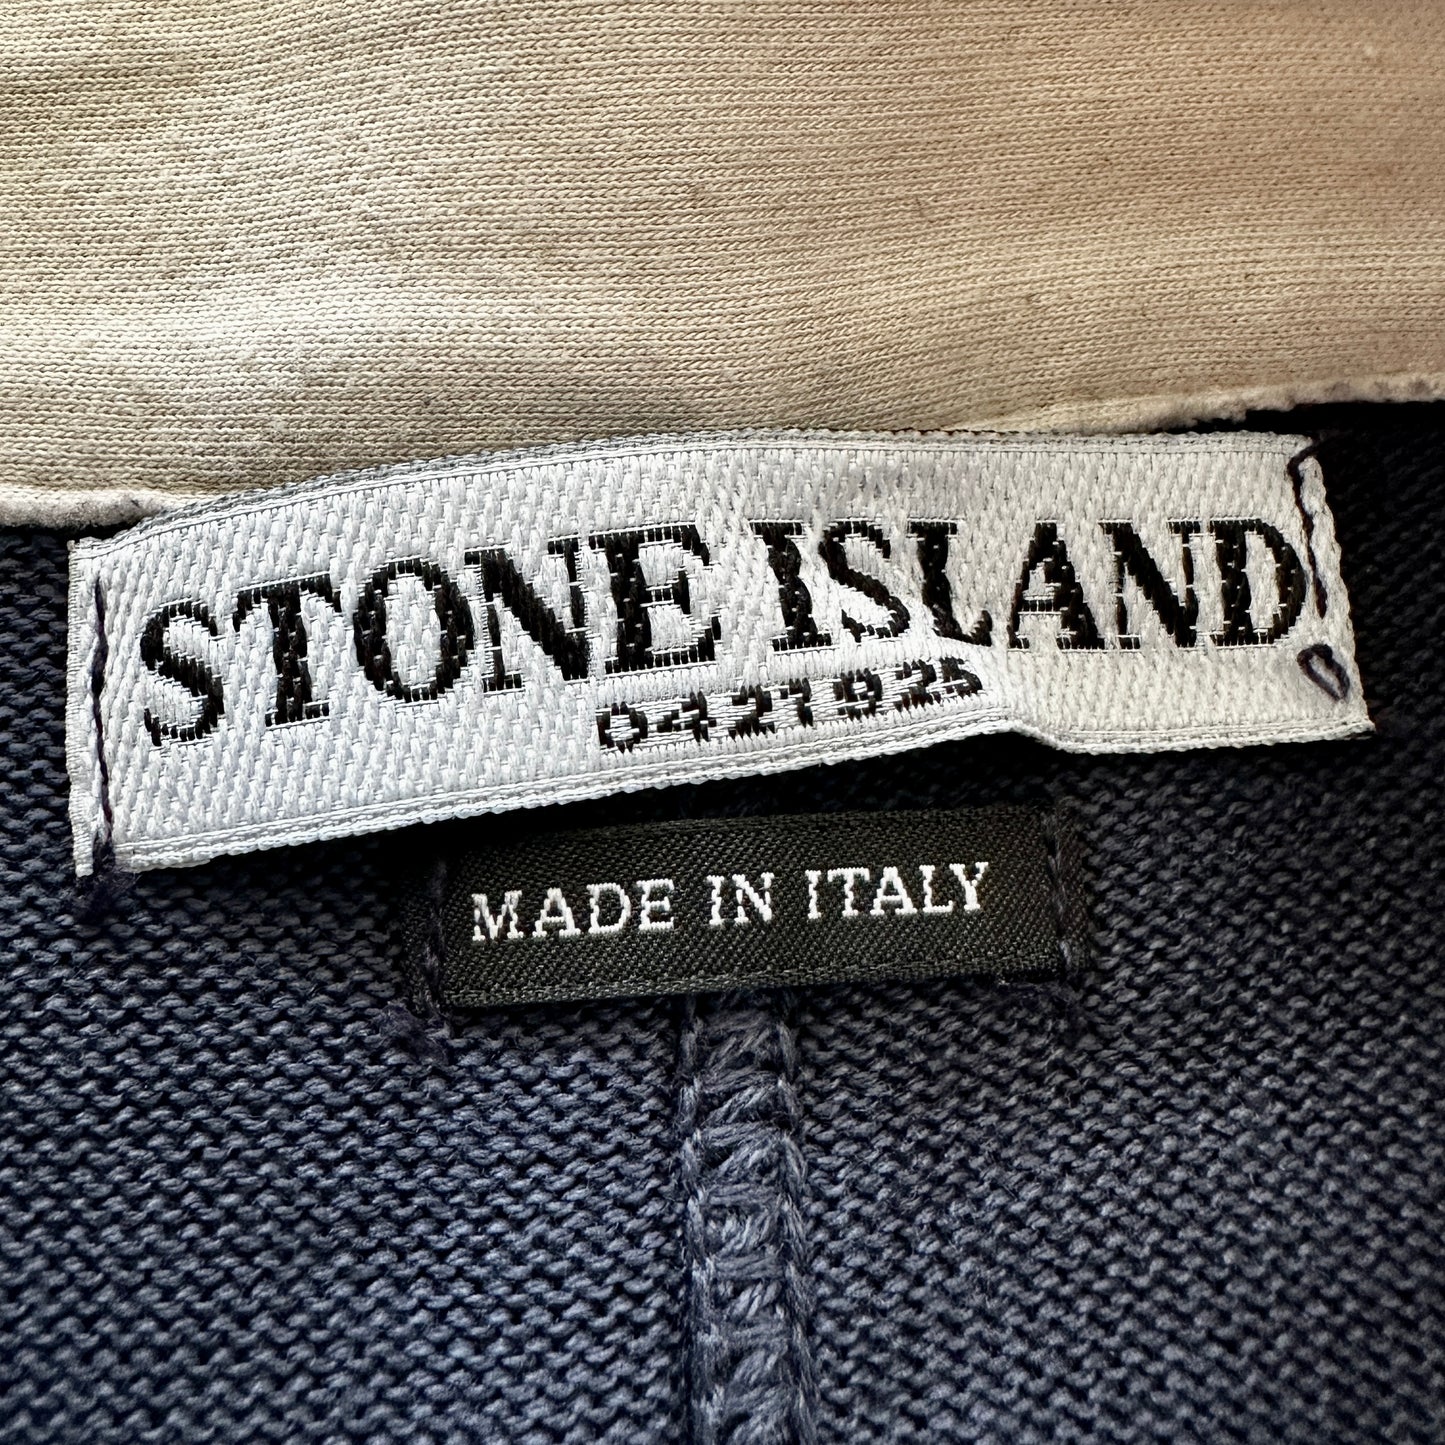 Stone Island 2005 Polo Longsleeve Shirt - L - Made in Italy